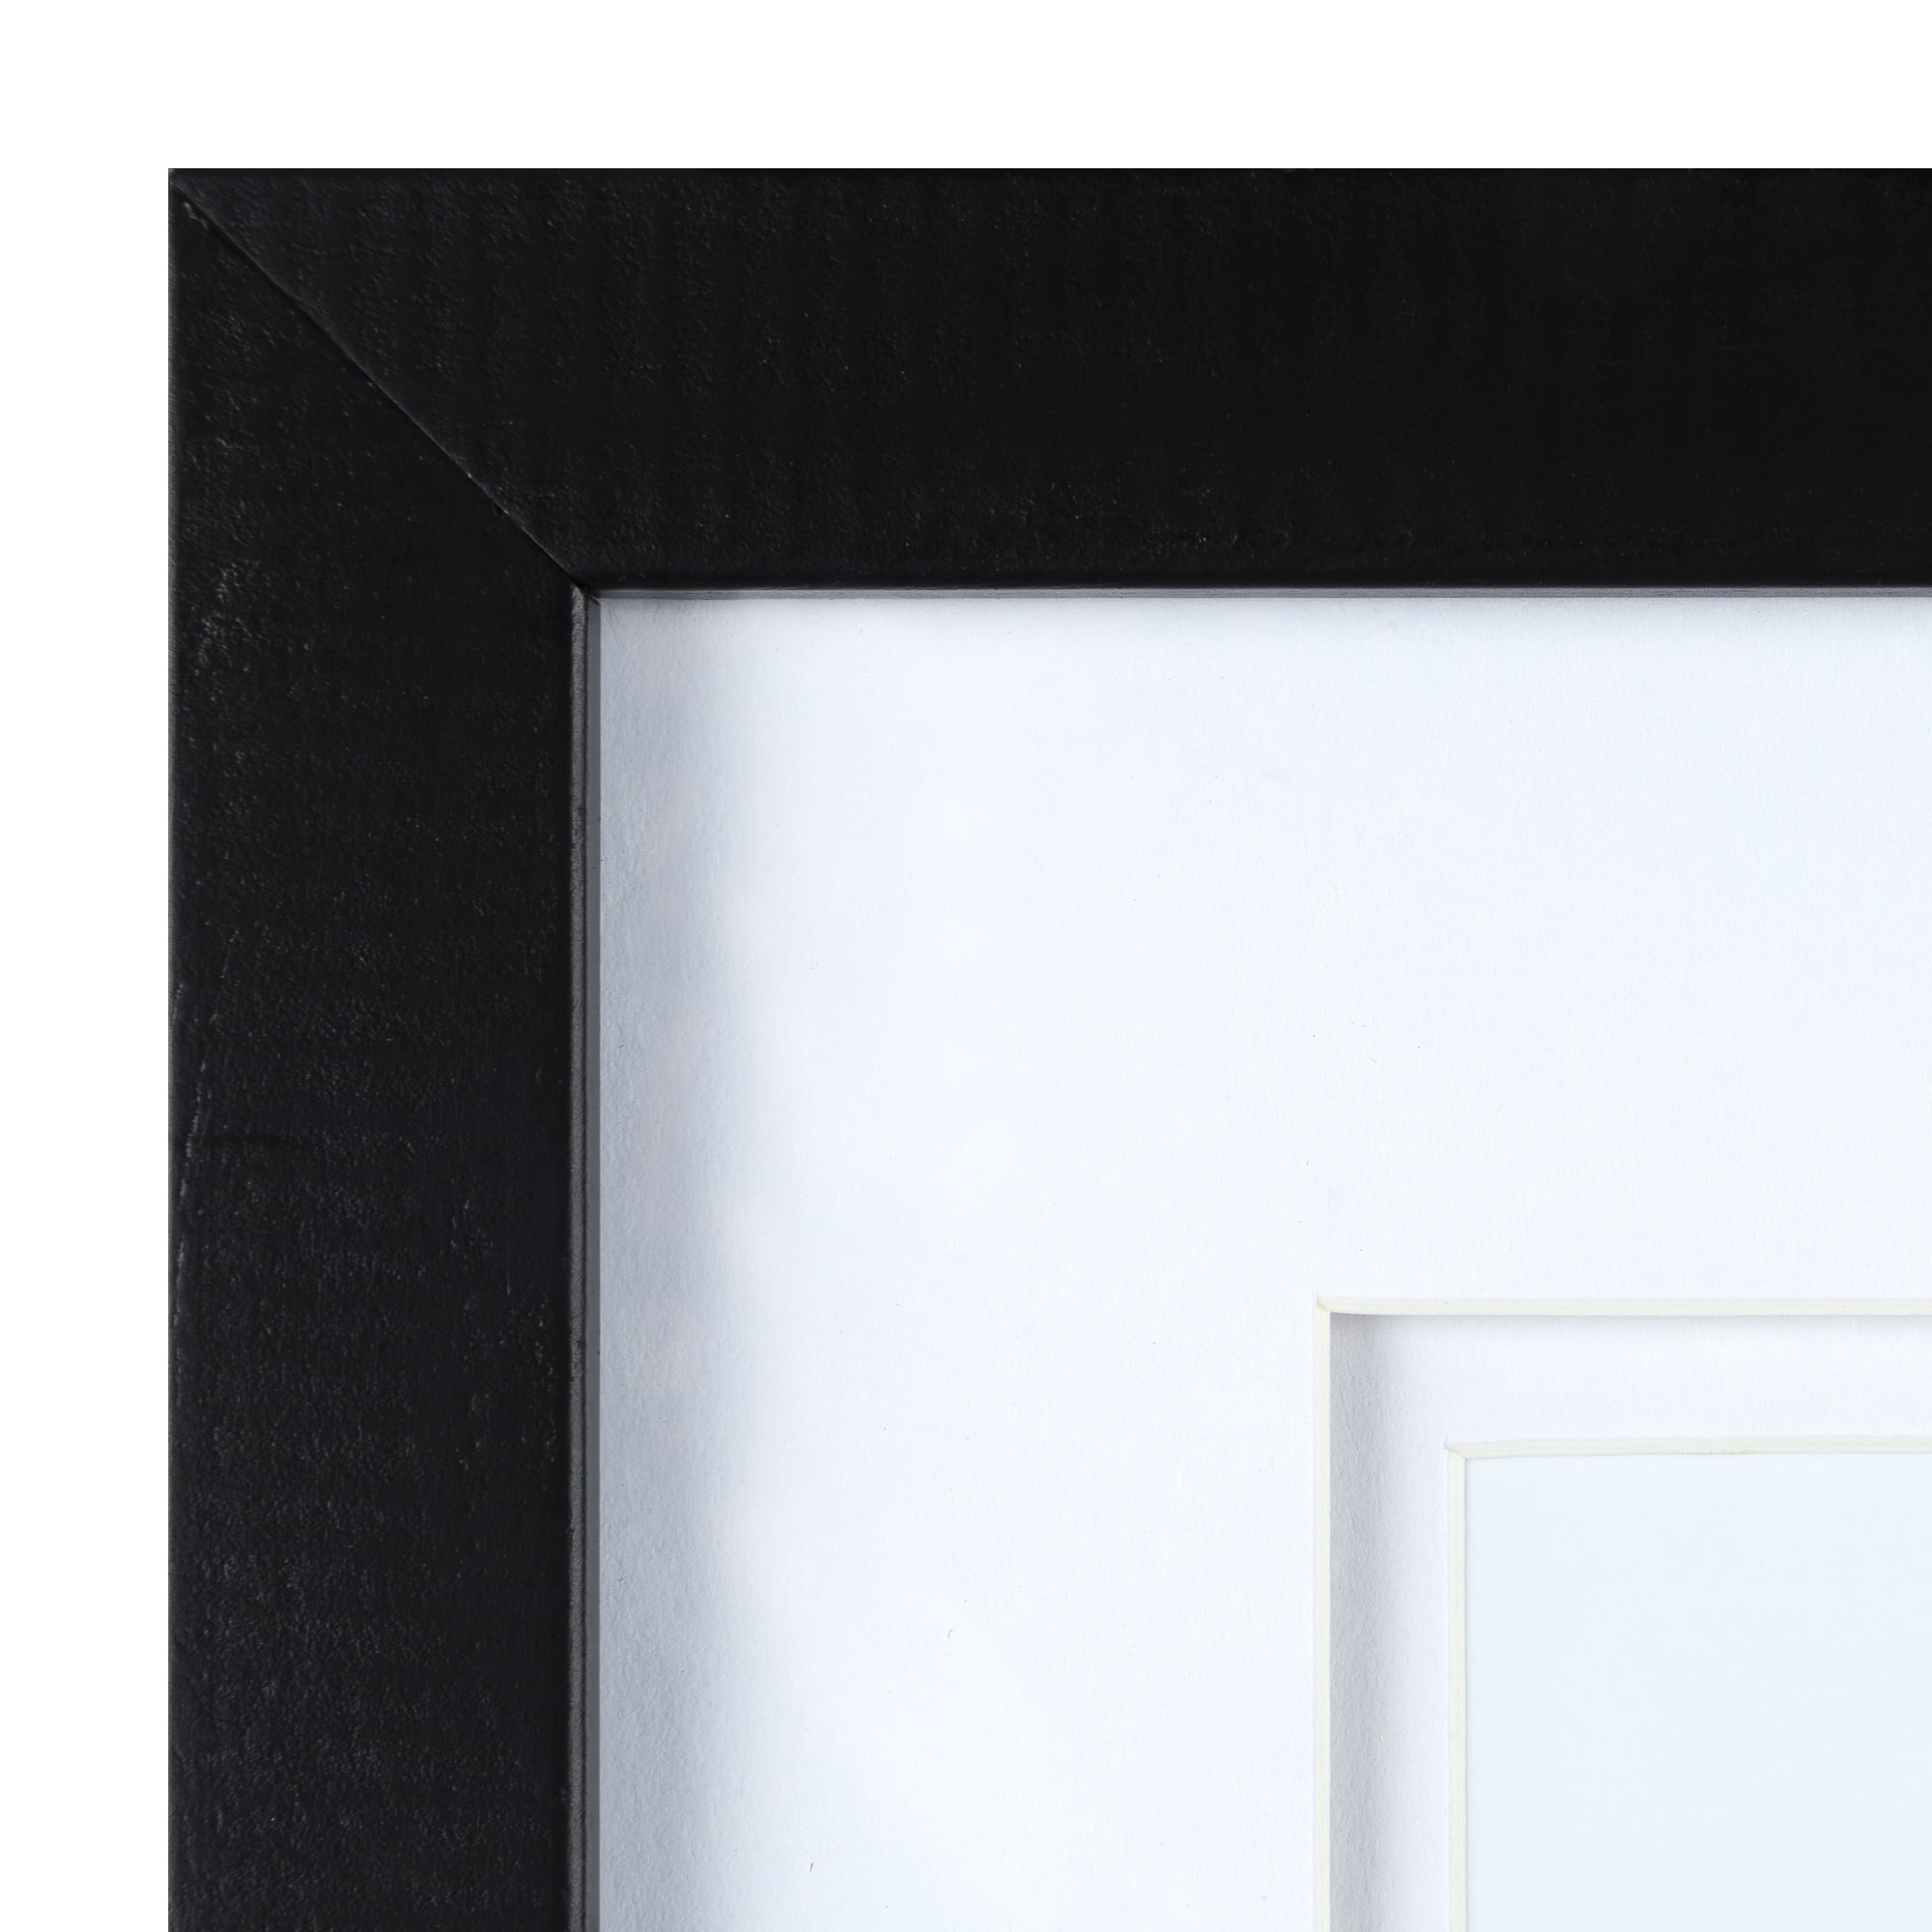 Seven Piece Black Picture Frame Set, White Display Mats